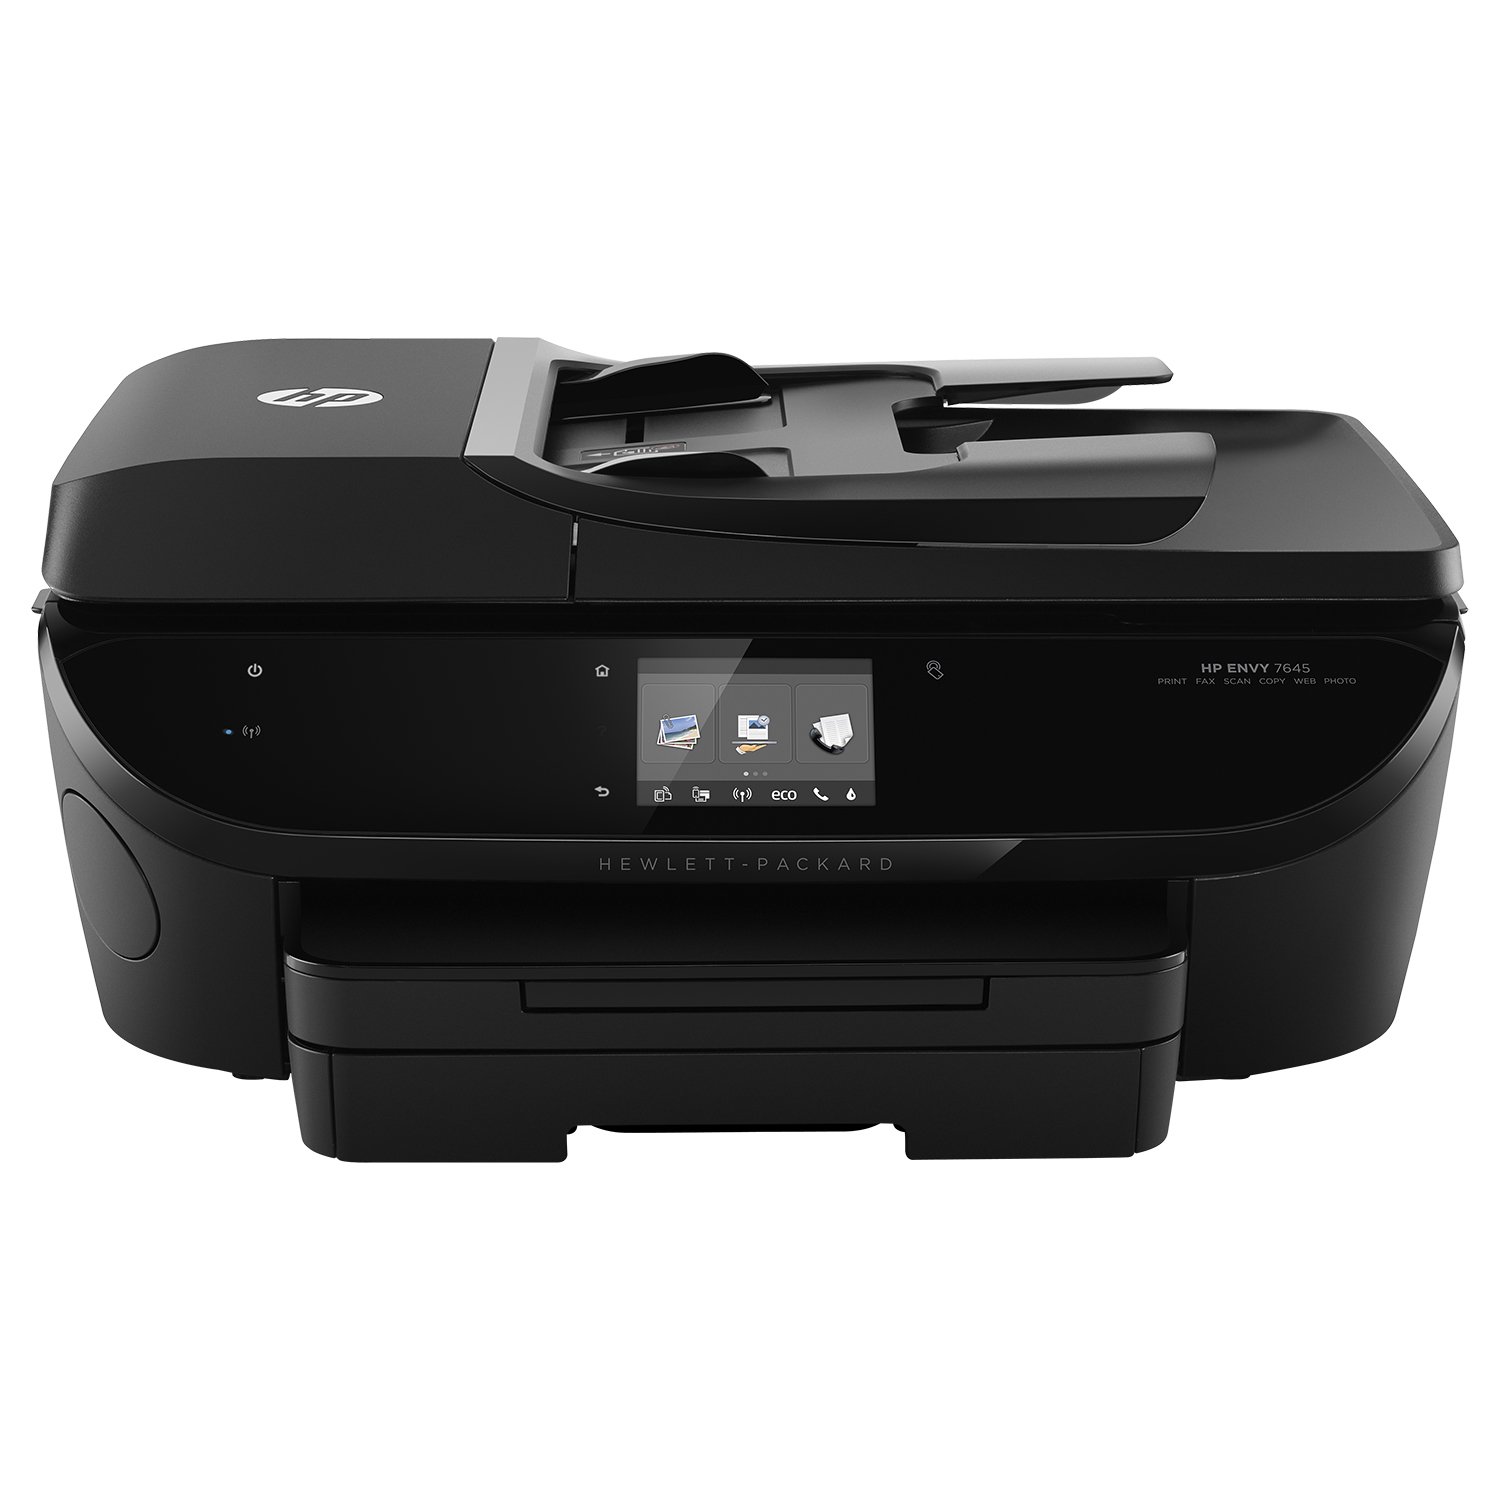 ENVY 7645 e-All-in-One Printer